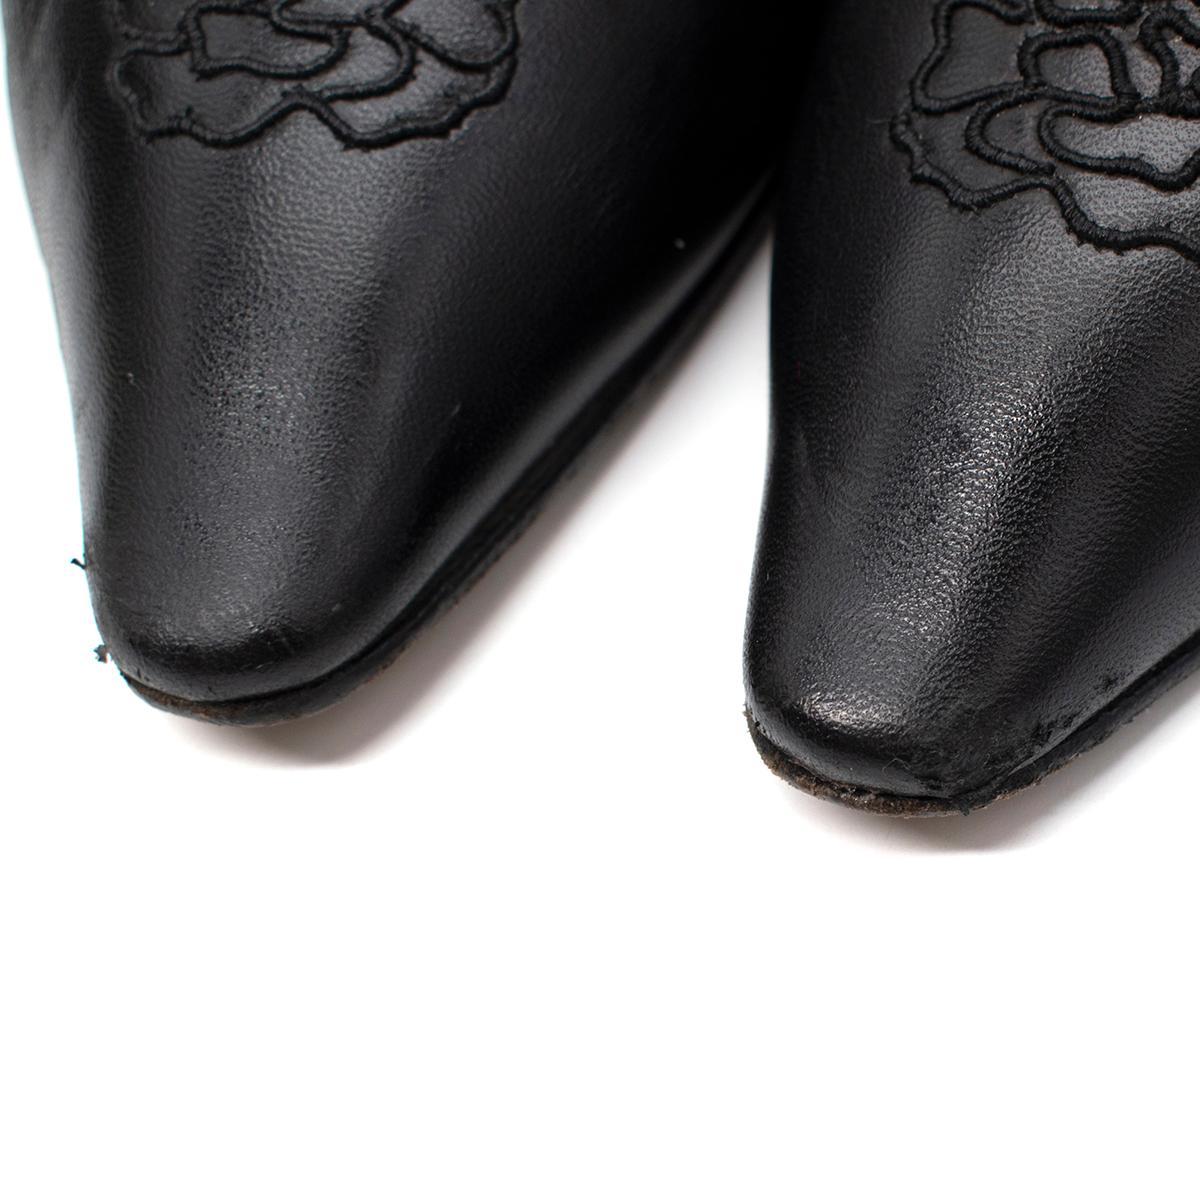 Chanel Black Leather Camellia Embroidered Vintage Pumps - Us size 8 For Sale 2